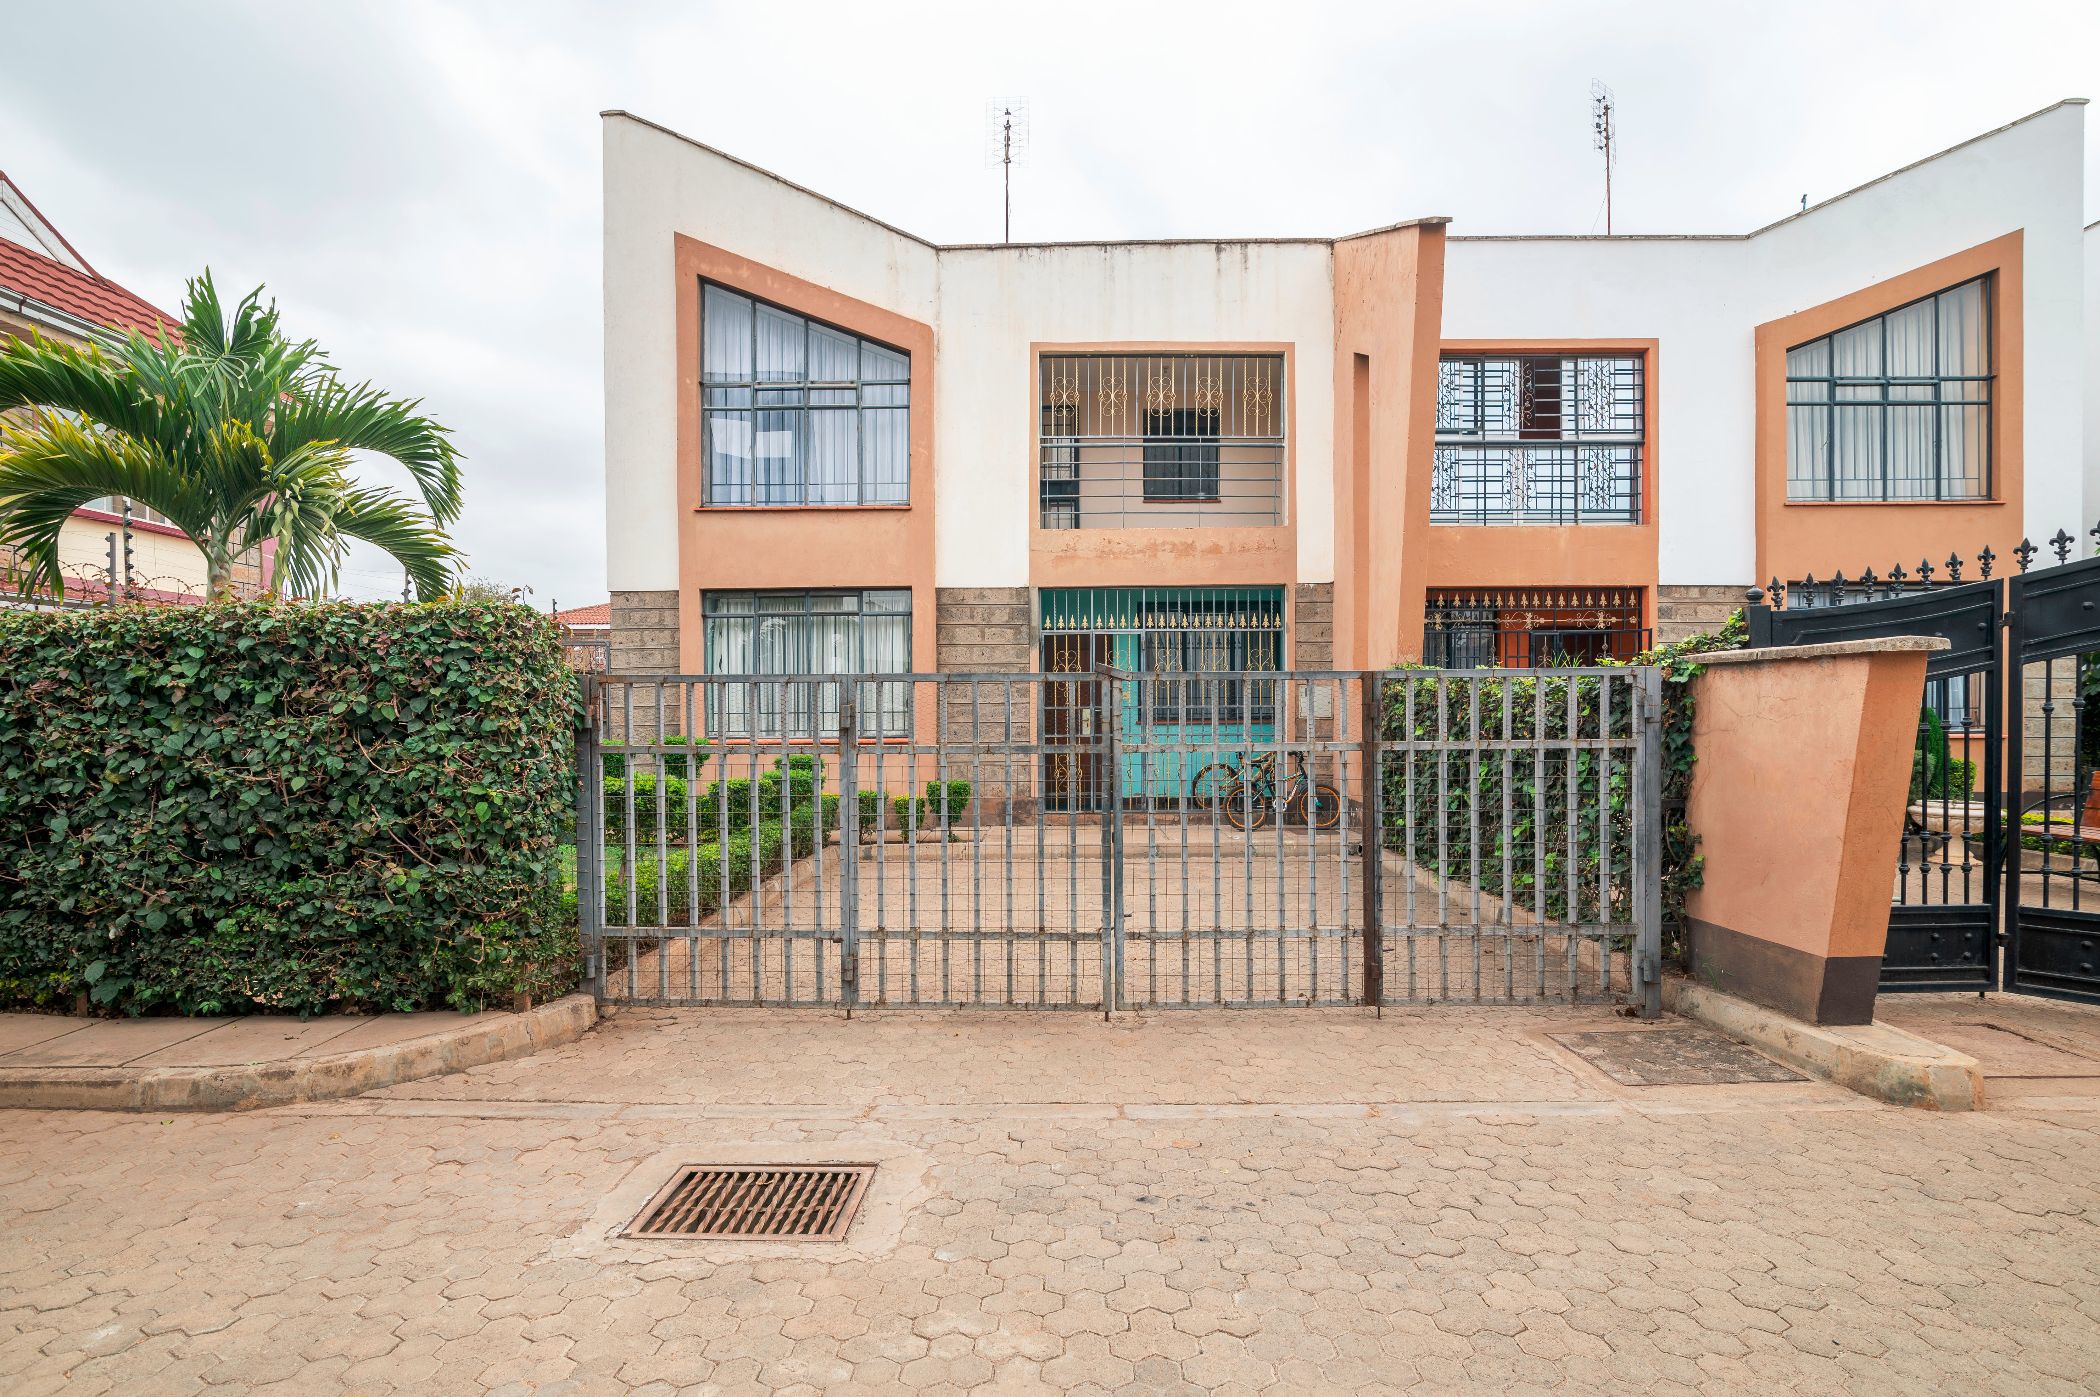 House for sale in Syokimau (Kenya)